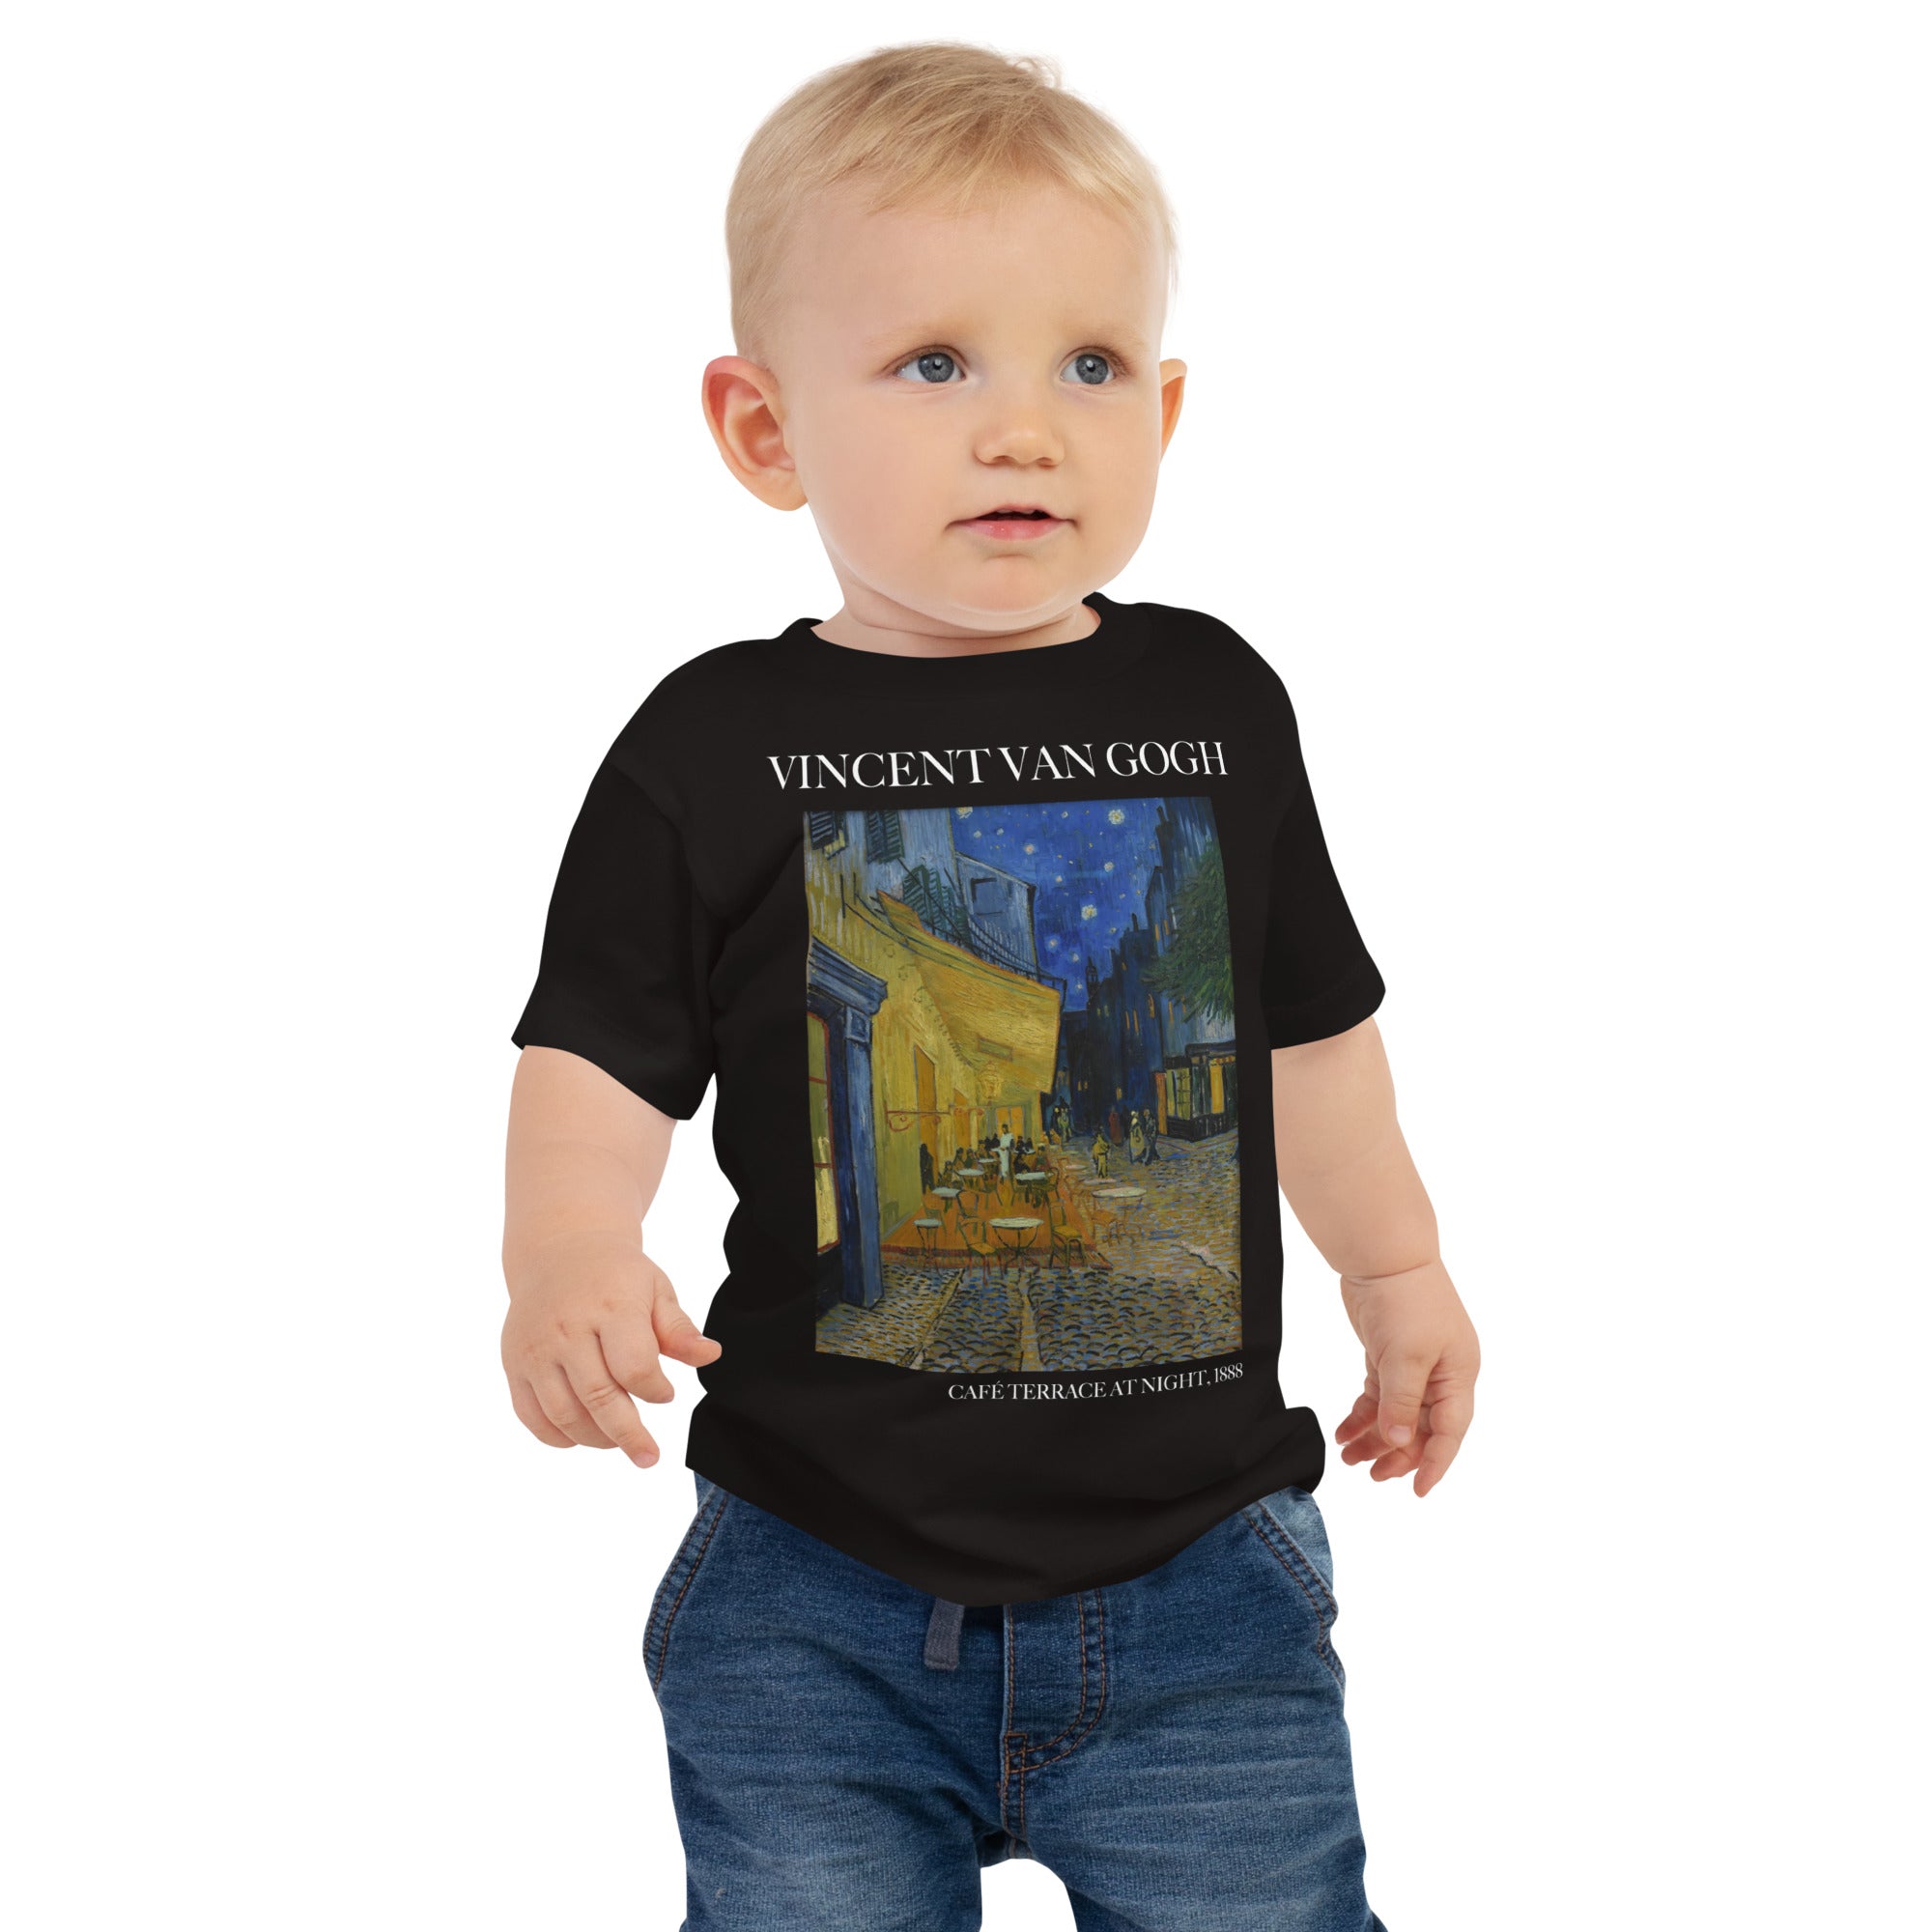 Vincent van Gogh 'Café Terrace at Night' Famous Painting Baby Staple T-Shirt | Premium Baby Art Tee